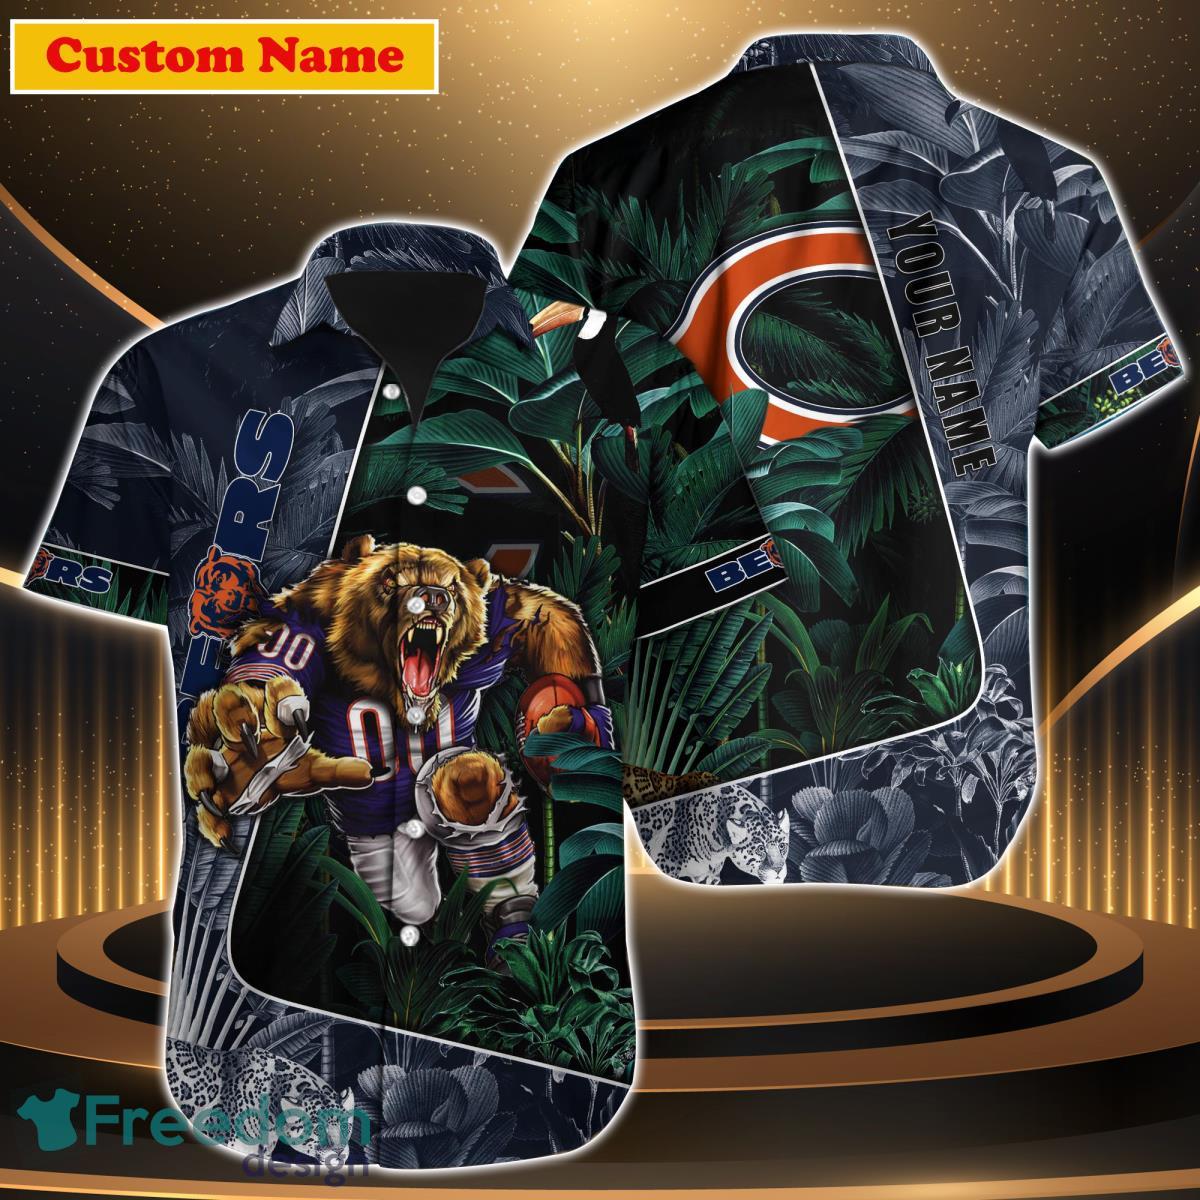 Miami Dolphins NFL Custom Name Baseball Jersey Shirt Gift For Men And Women  Fans - Freedomdesign